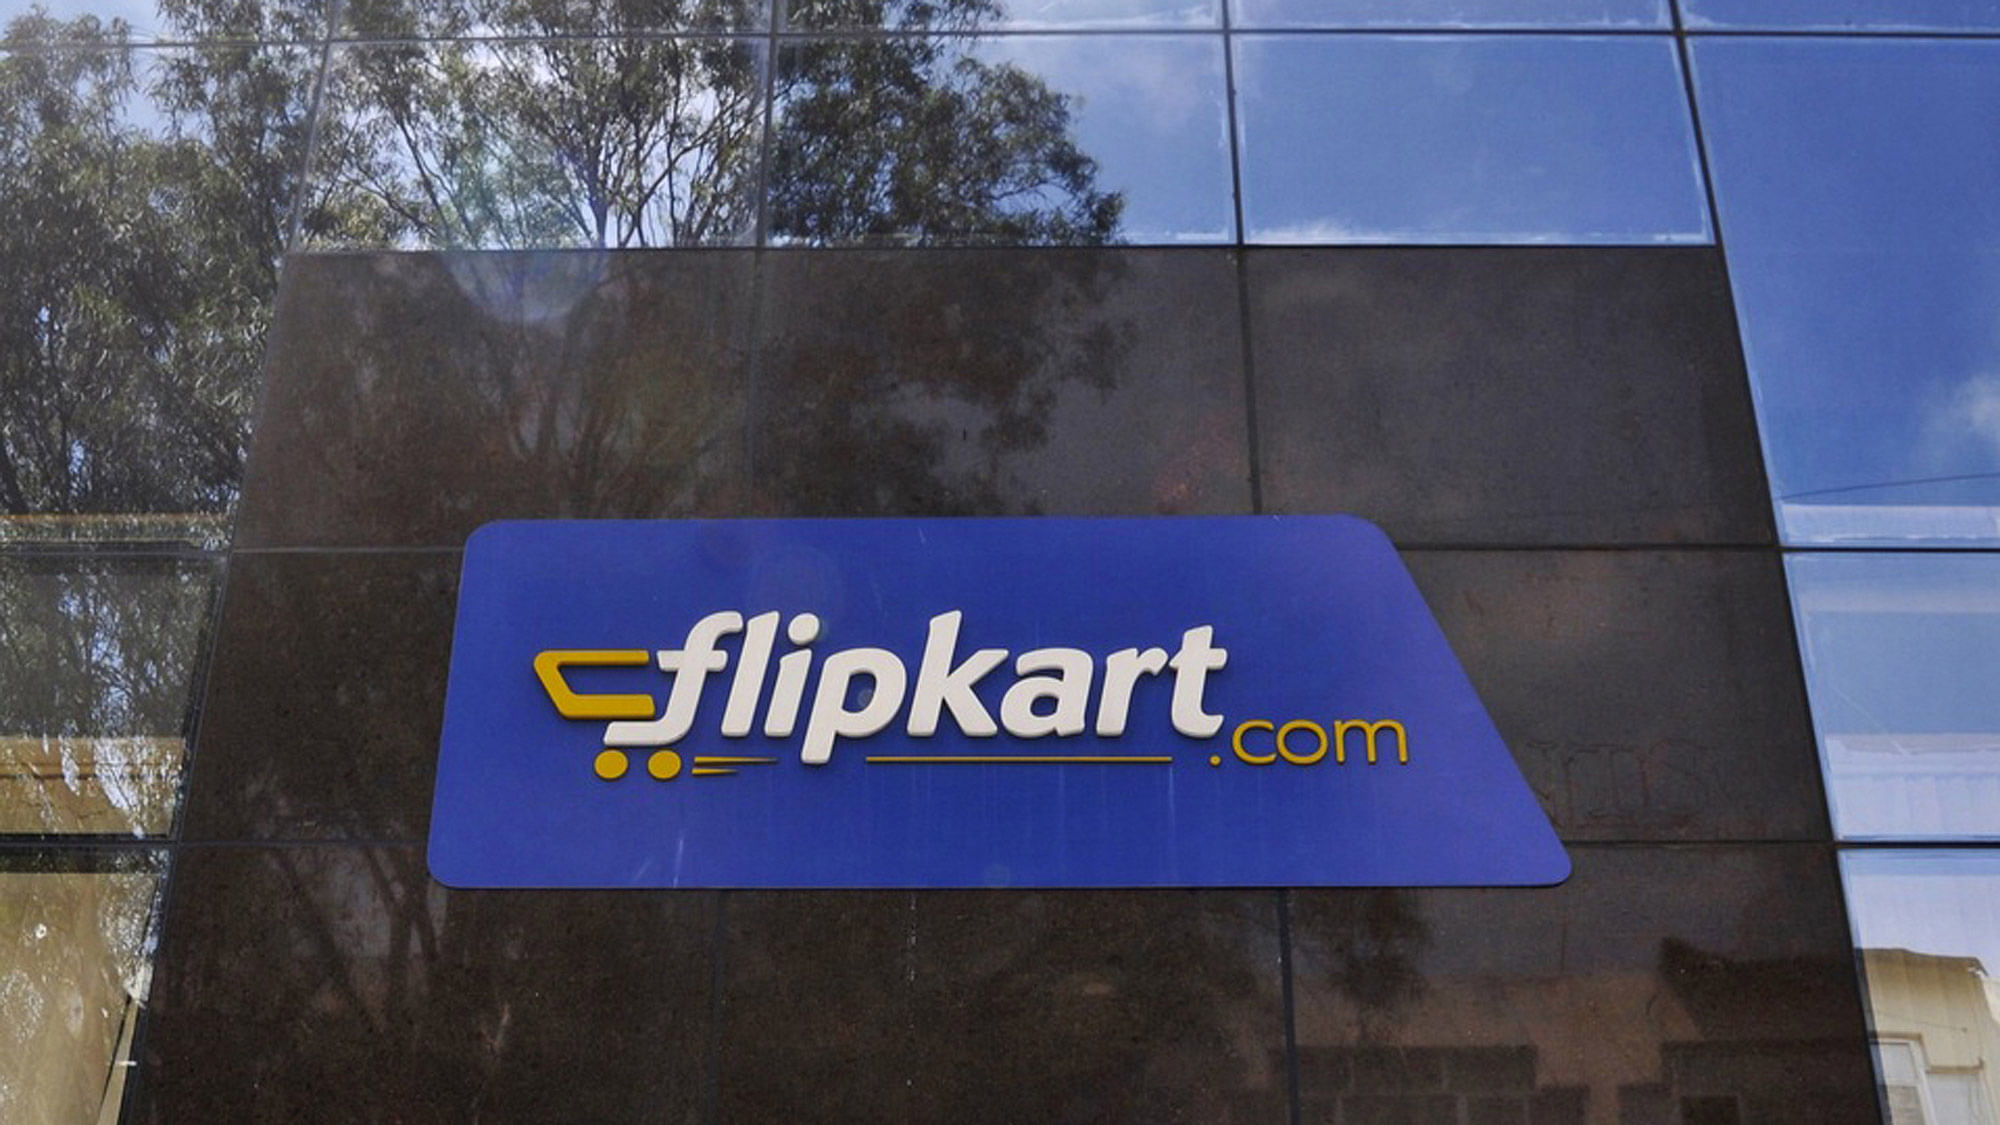 Flipkart also has an 8,00,000 sq-ft campus in Bengaluru.